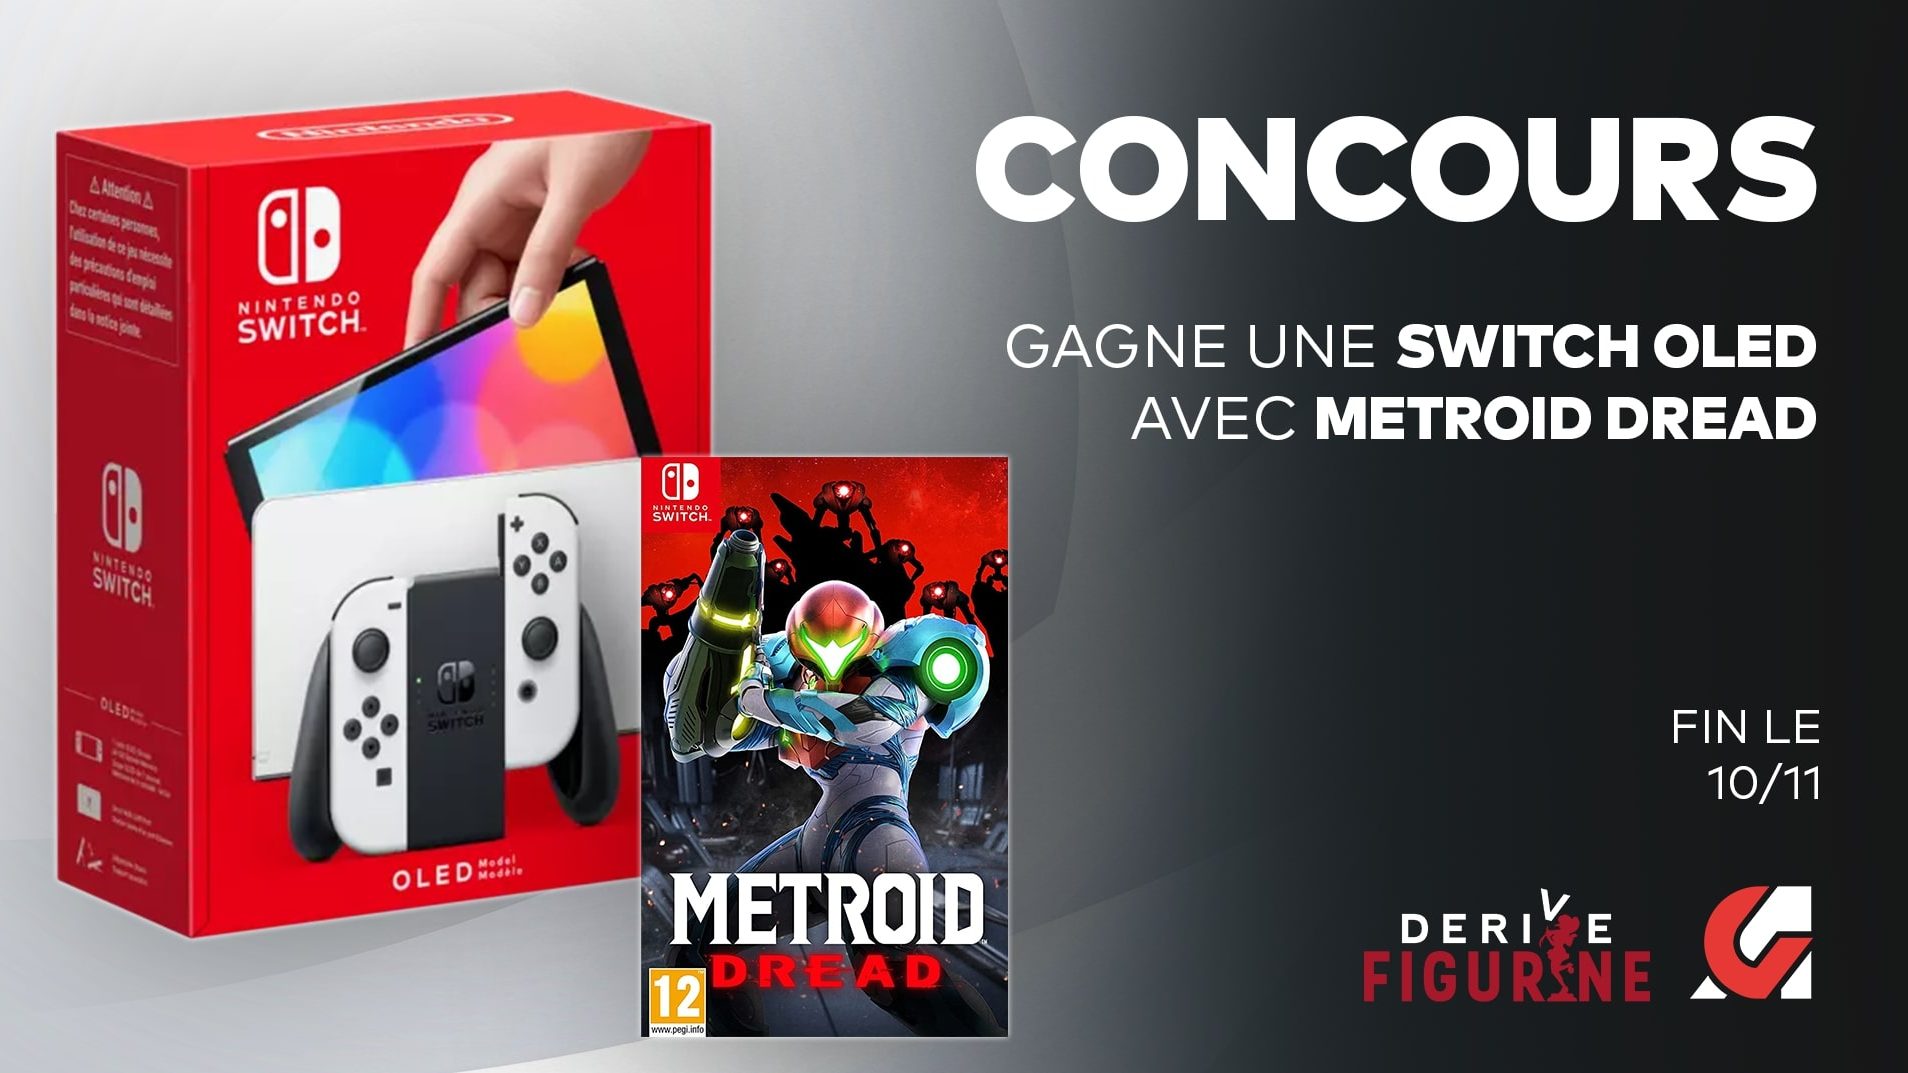 Concours : Une console Nintendo Switch OLED avec Metroid Dread à gagner